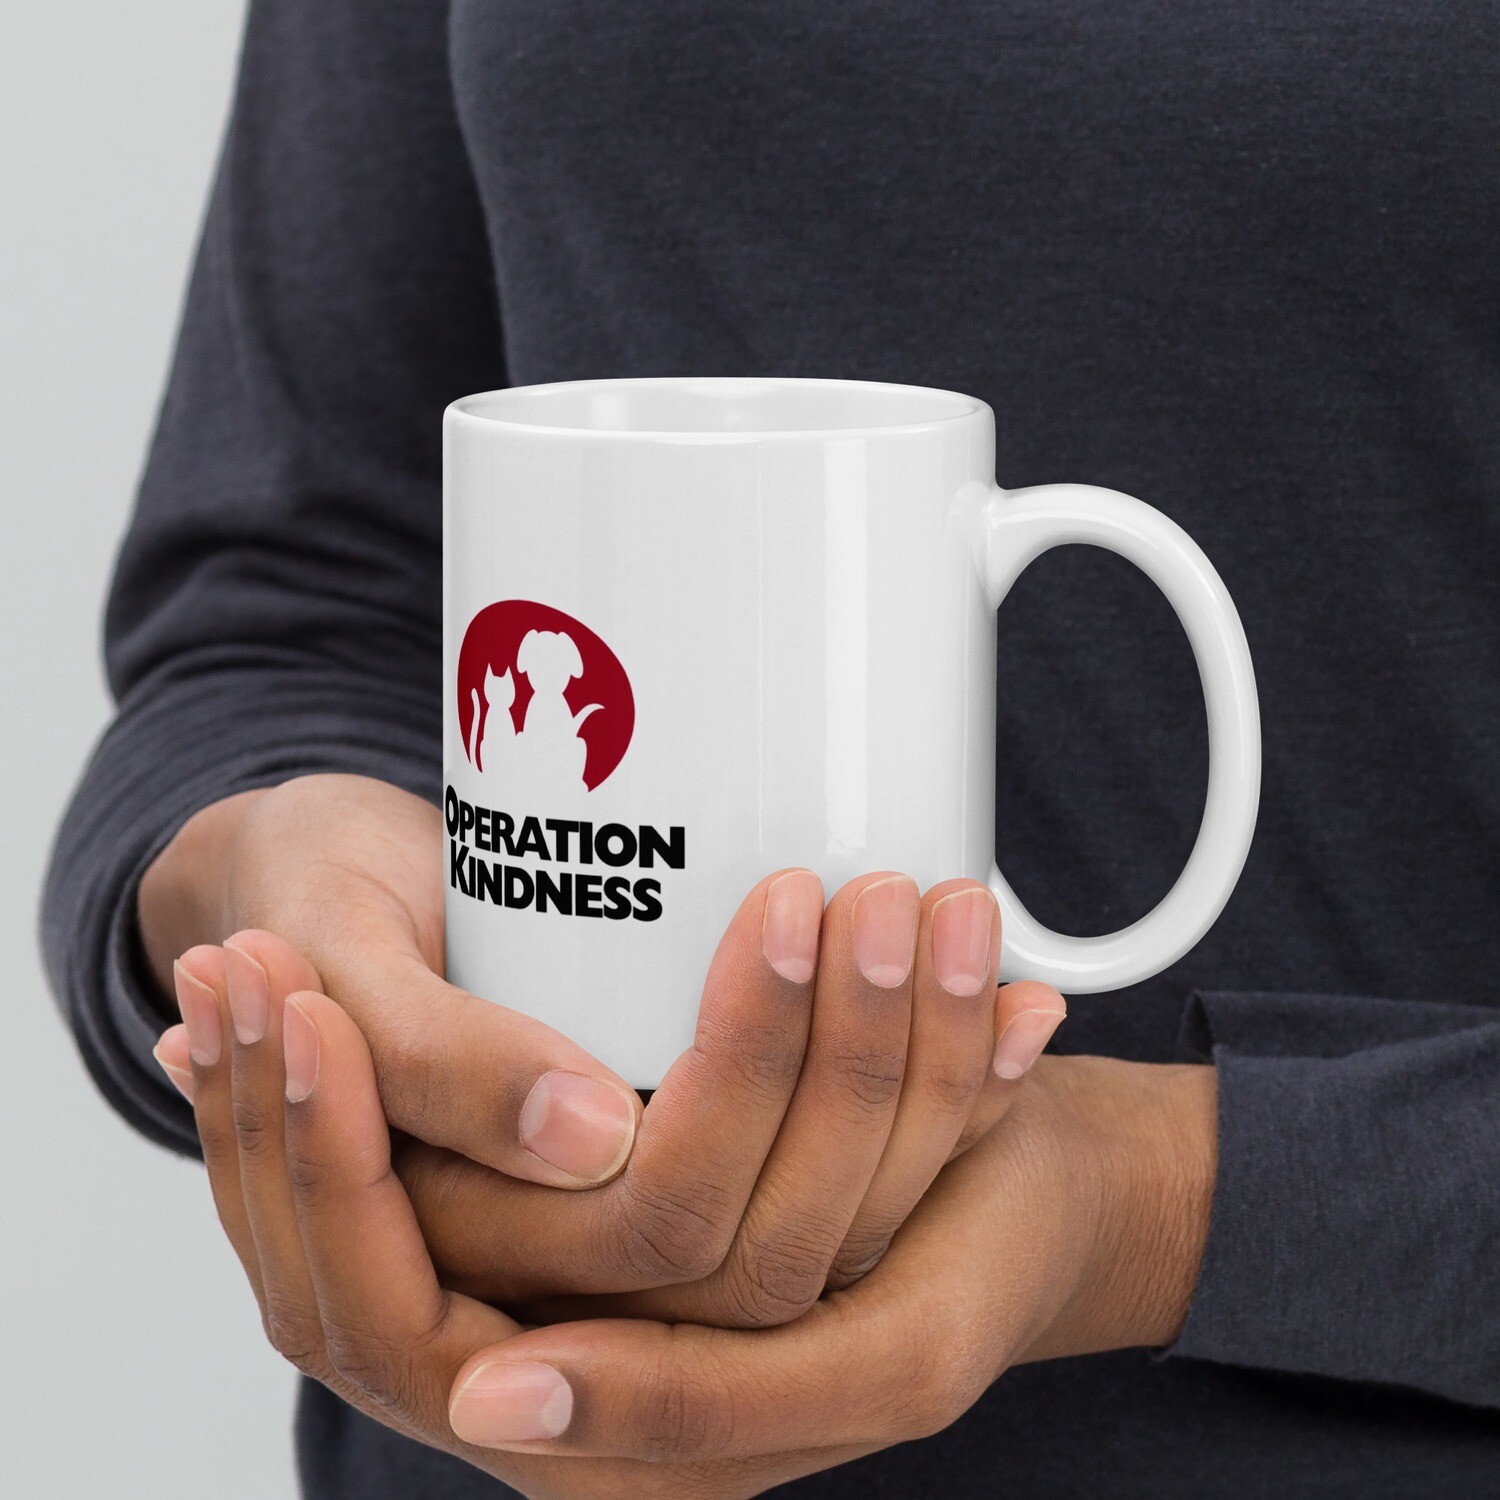 Operation Kindness coffee mug